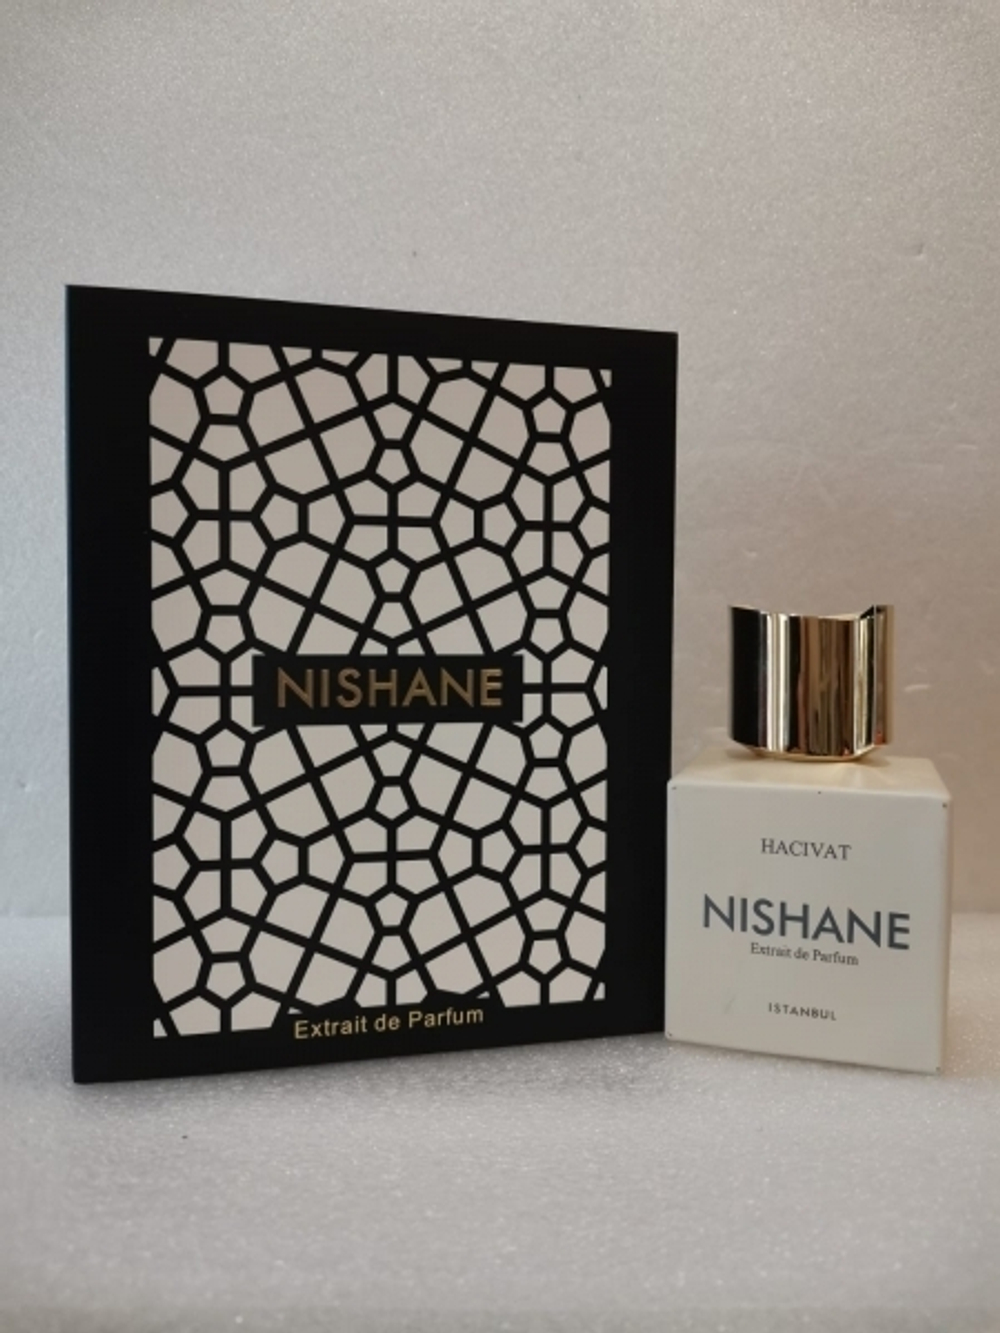 Nishane Hacivat 100 ml (duty free парфюмерия)